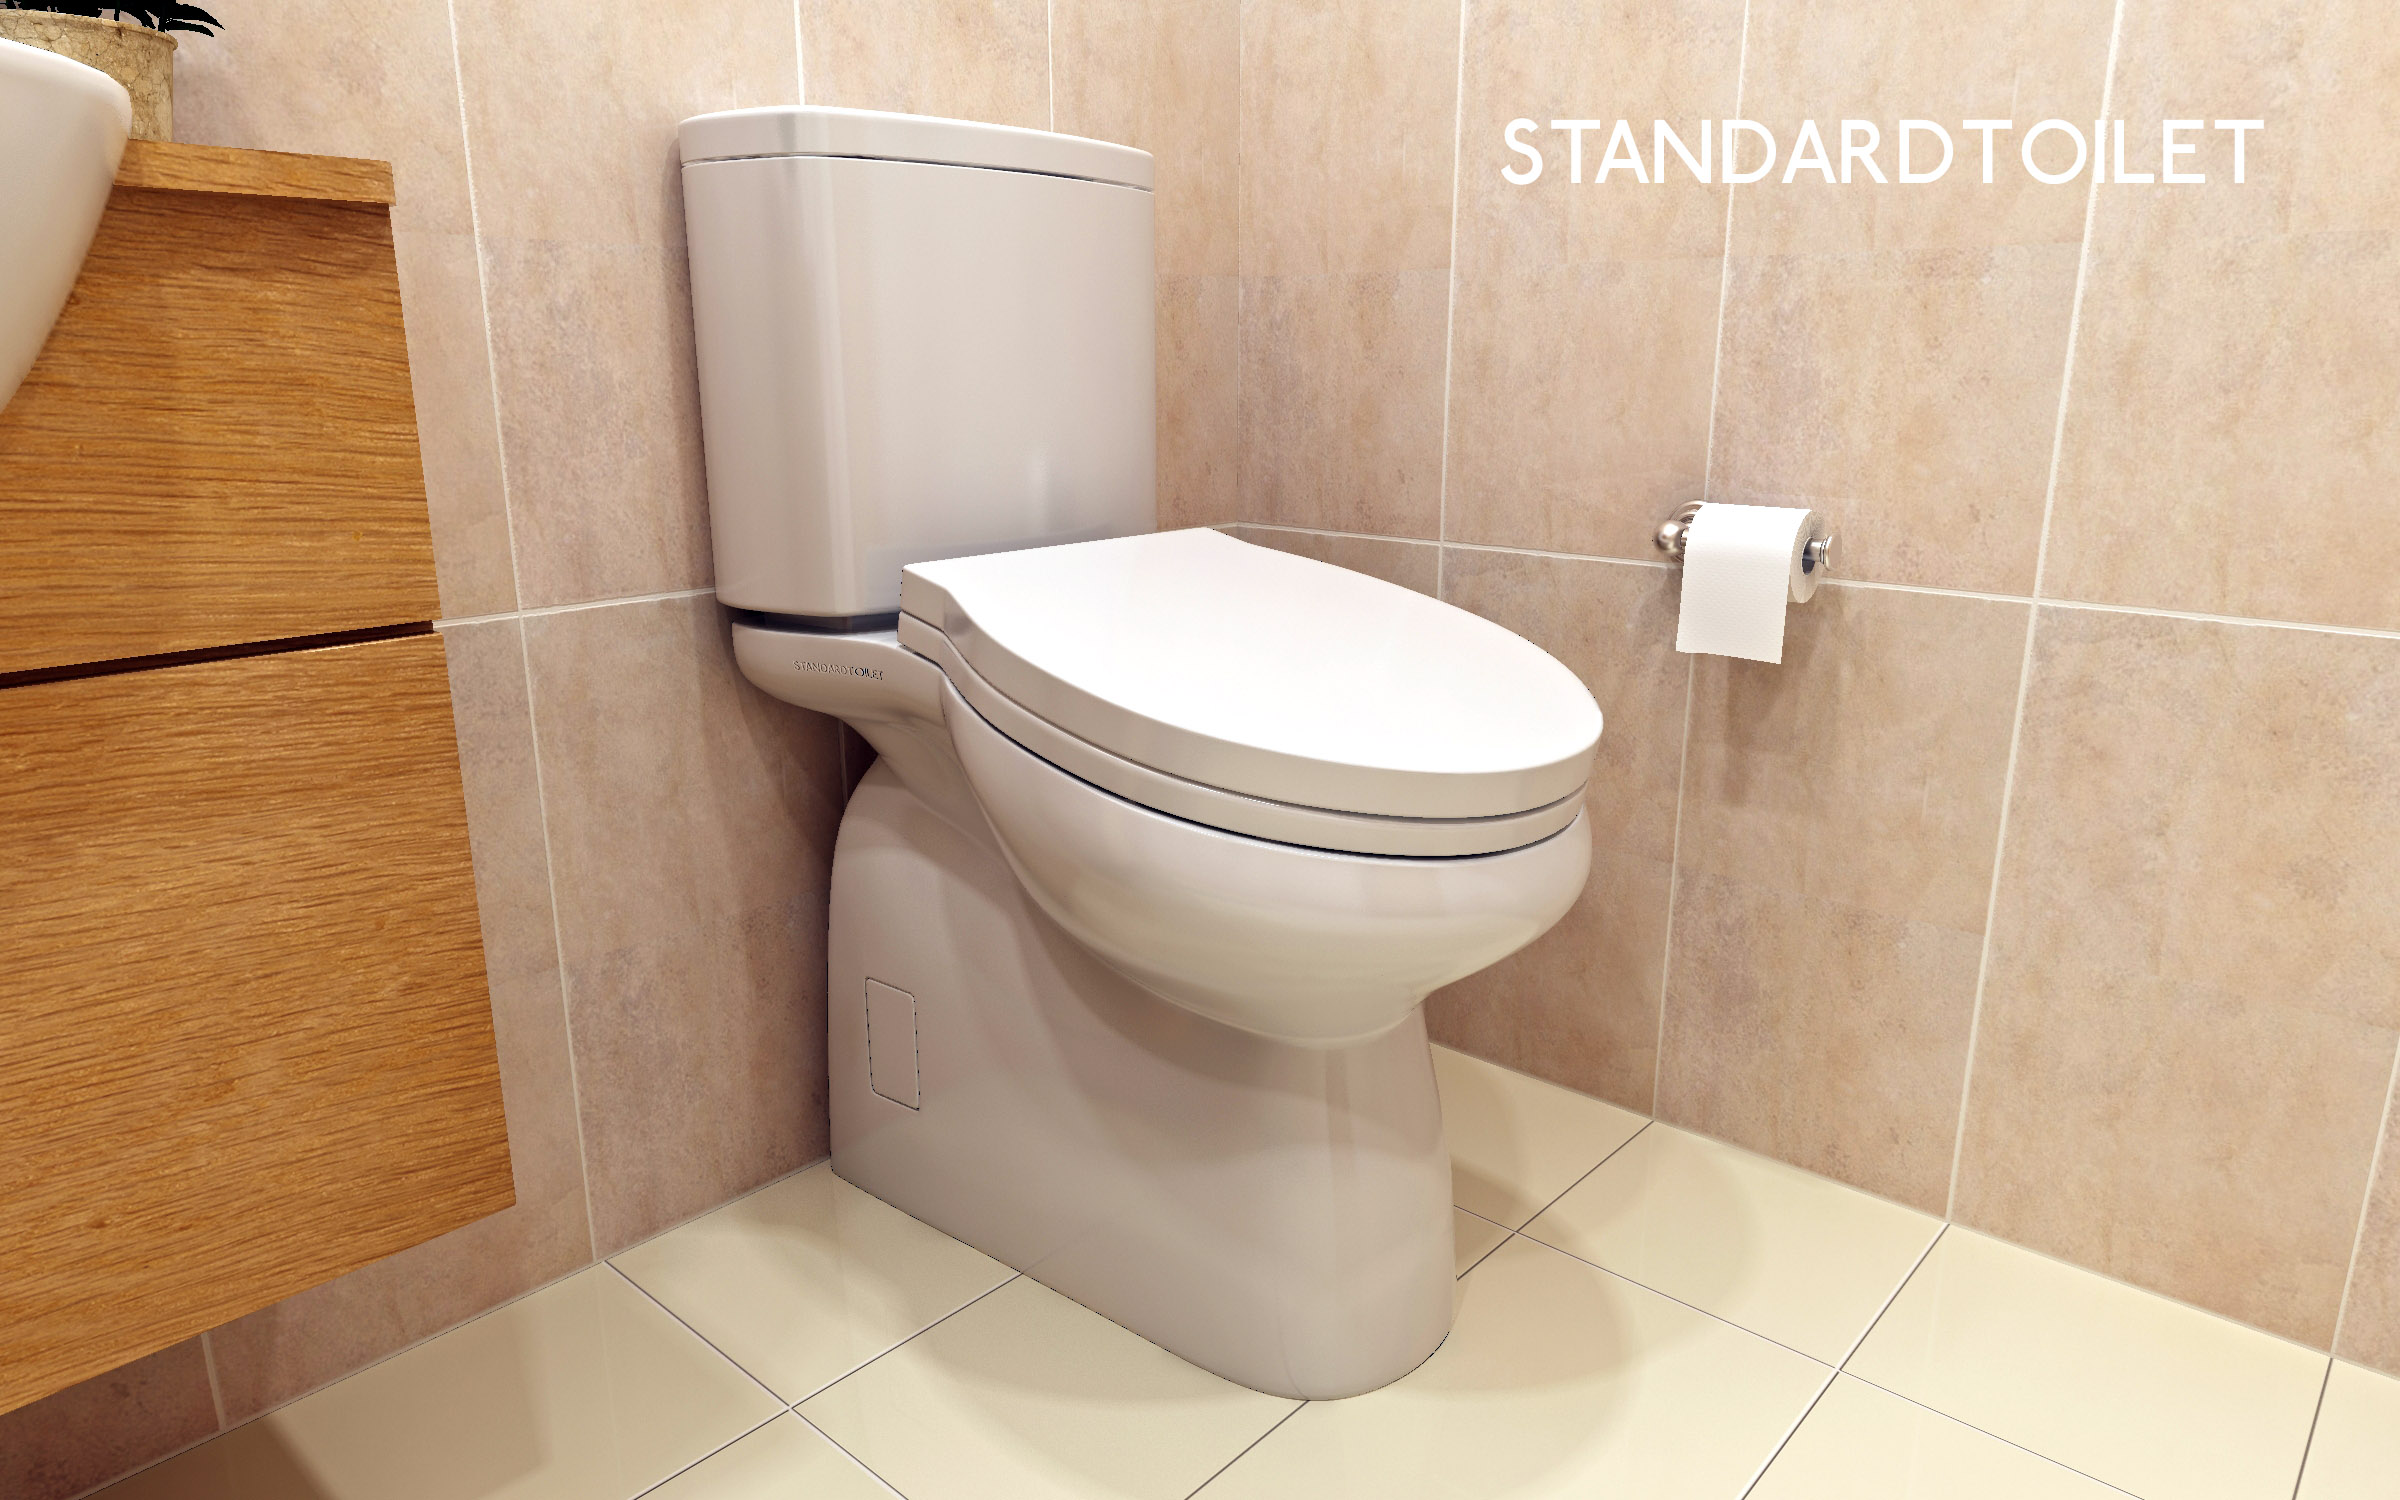 The New Standard Toilet British Toilet Association